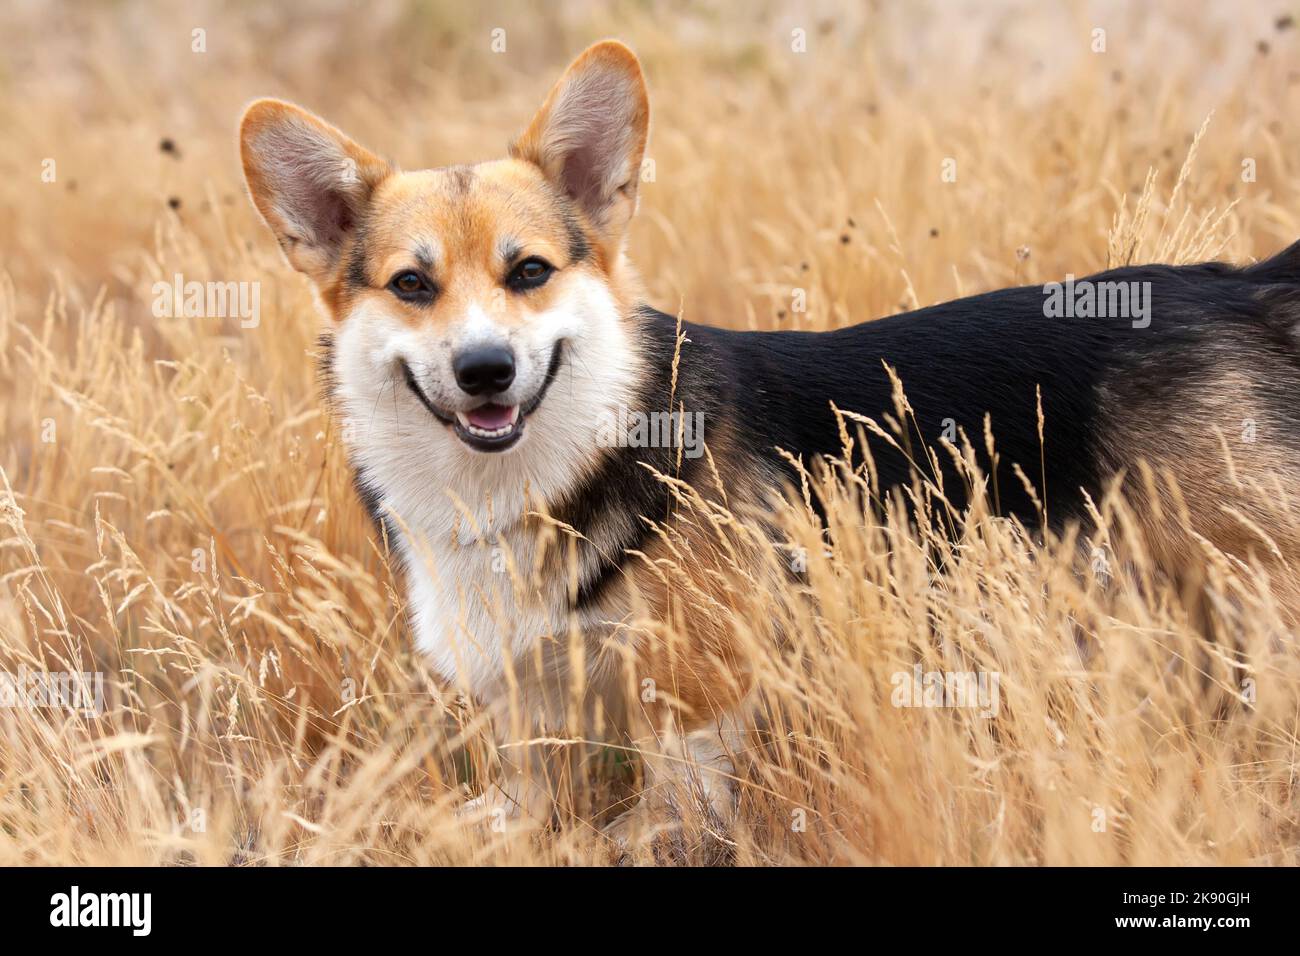 https://c8.alamy.com/comp/2K90GJH/happy-tricolor-pembroke-welsh-corgi-dog-walks-in-tall-golden-grass-dog-smiles-2K90GJH.jpg